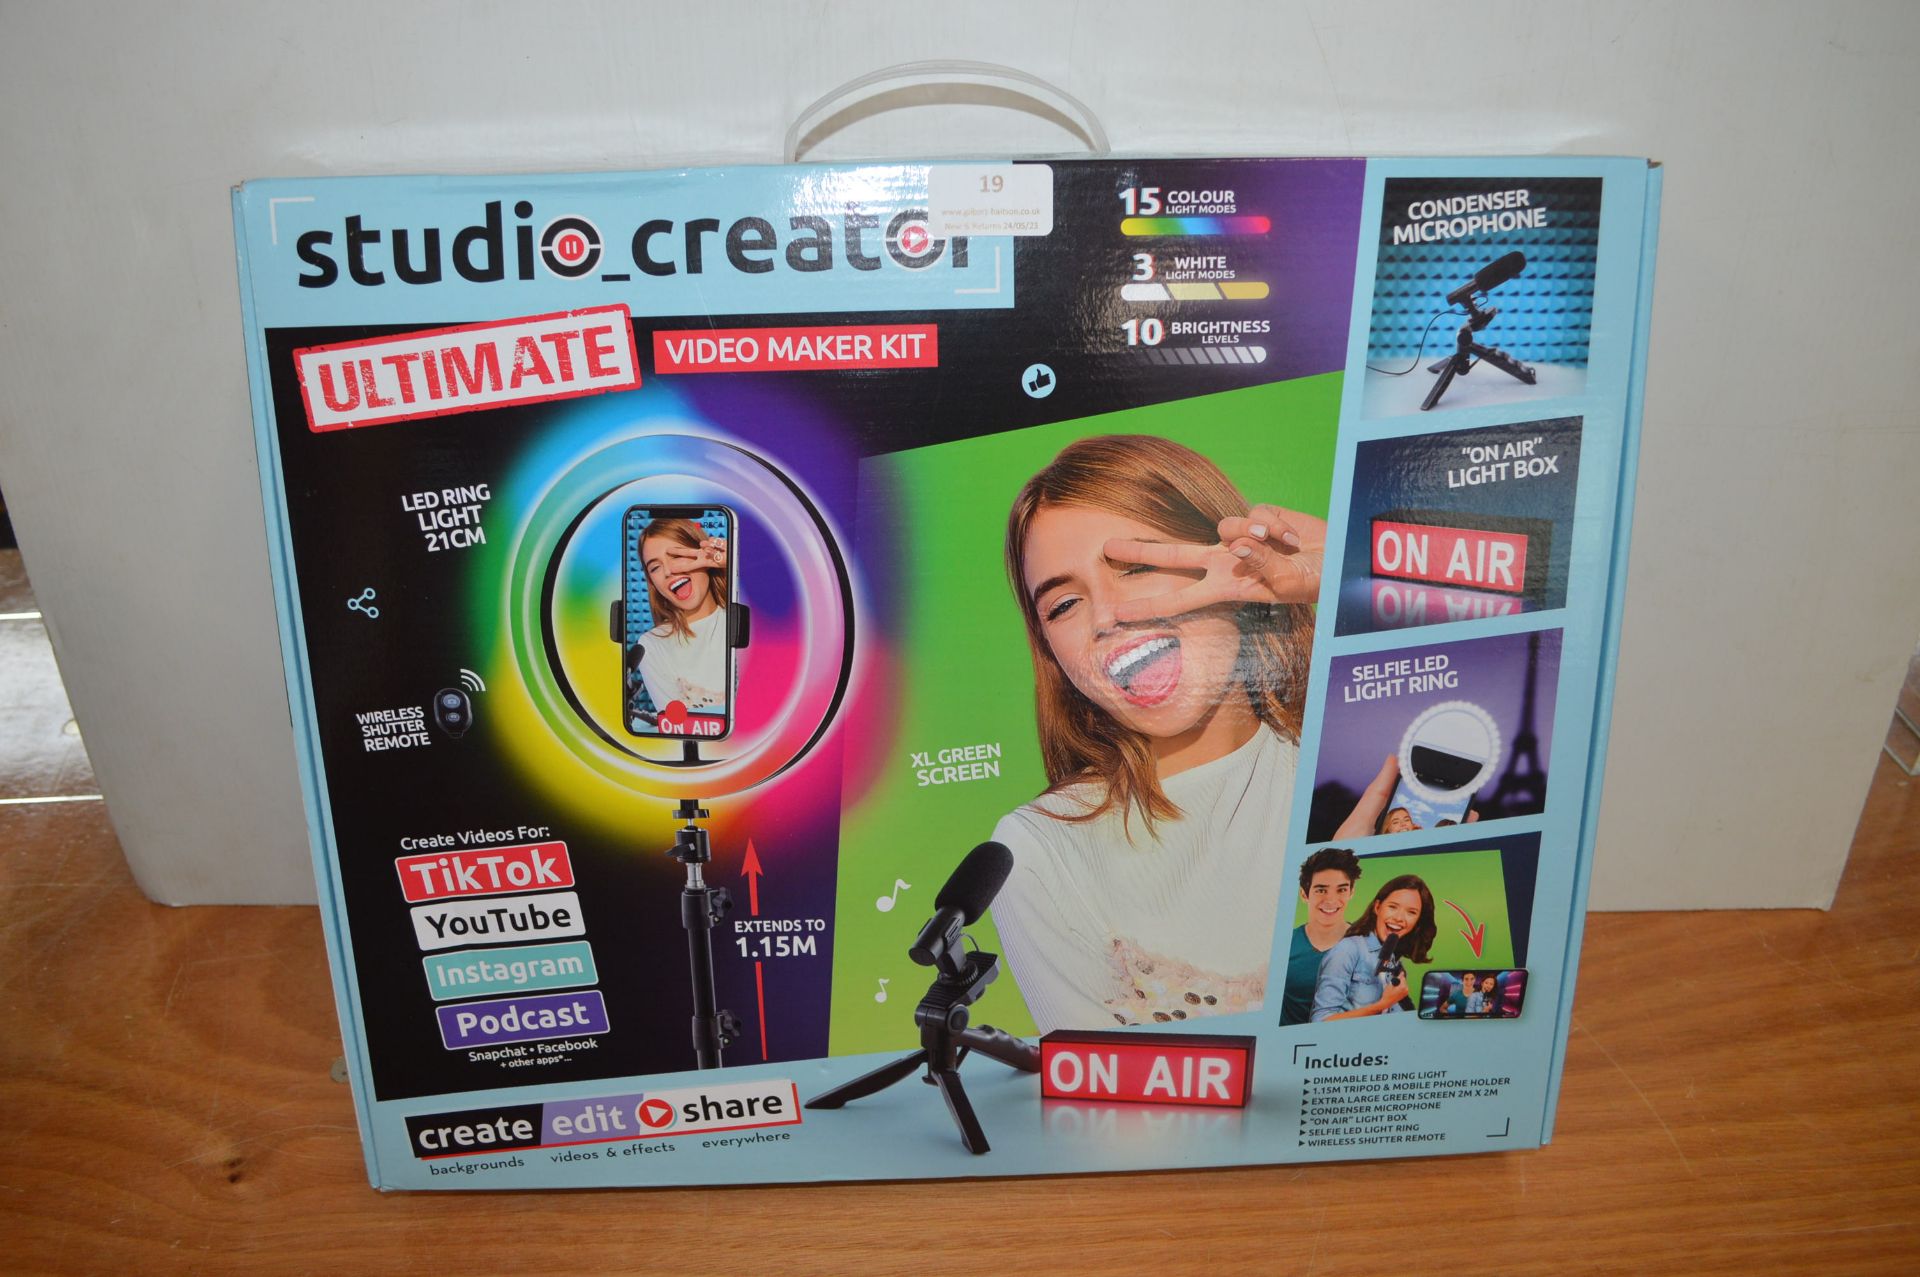 *Studio Creator Video Maker Kit